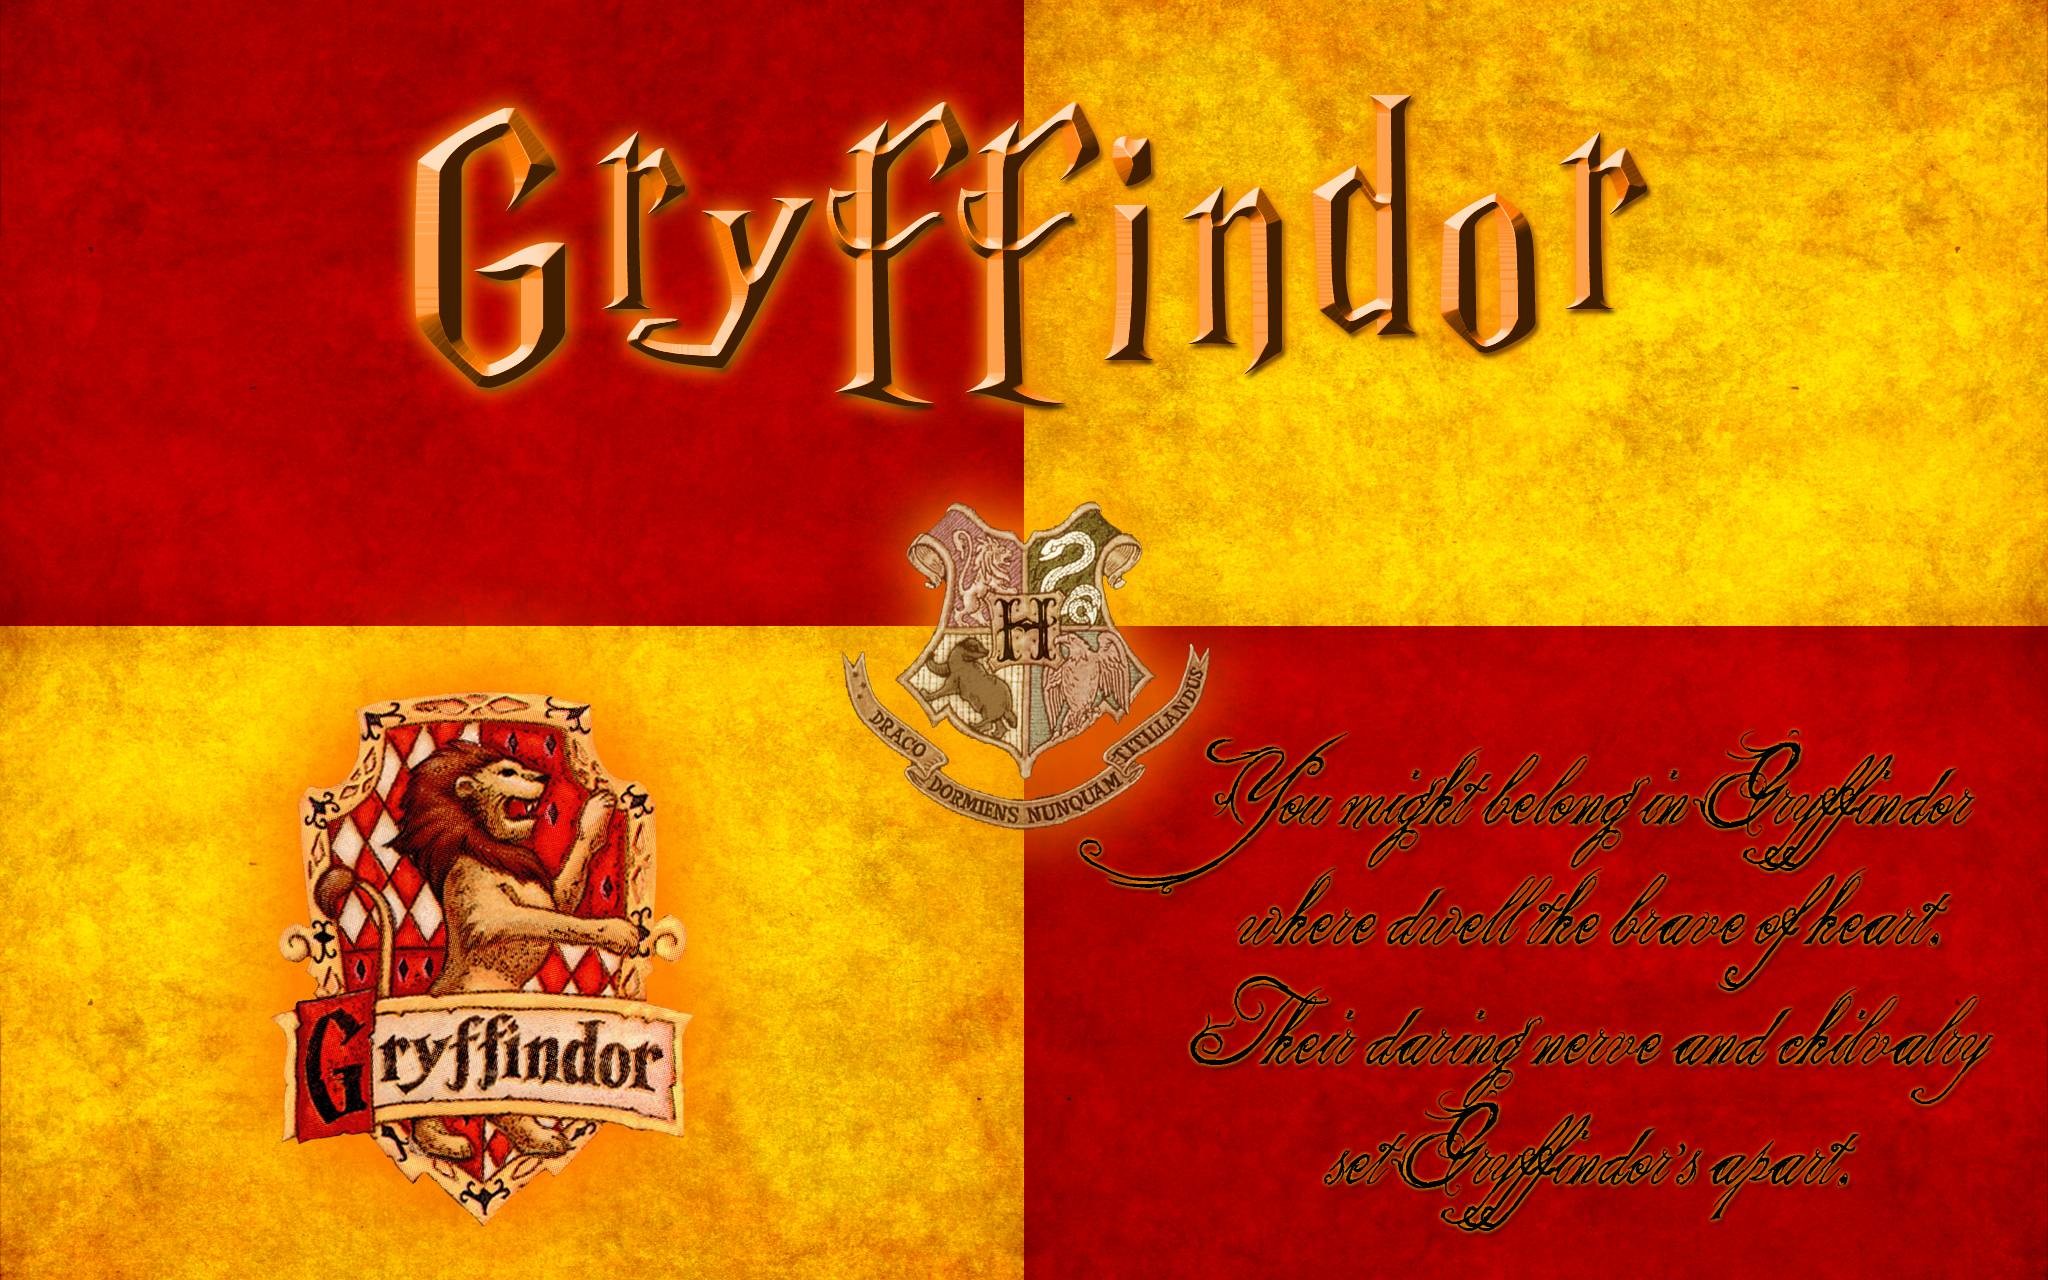 2048x1280 Gryffindor - Harry Potter Wallpaper (32294361) - Fanpop